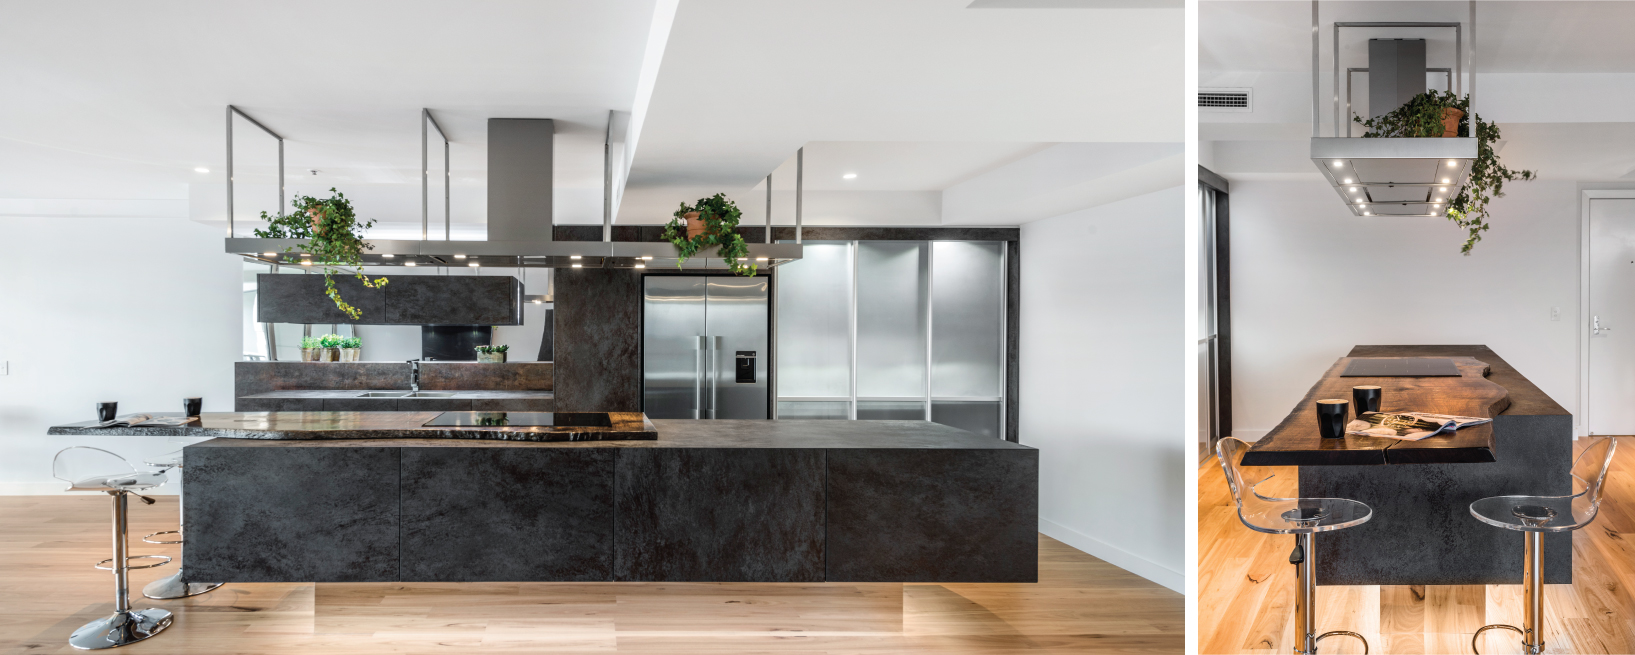 Brisbane Kitchen Design | Kitchen Renovations by Sublime Architectural